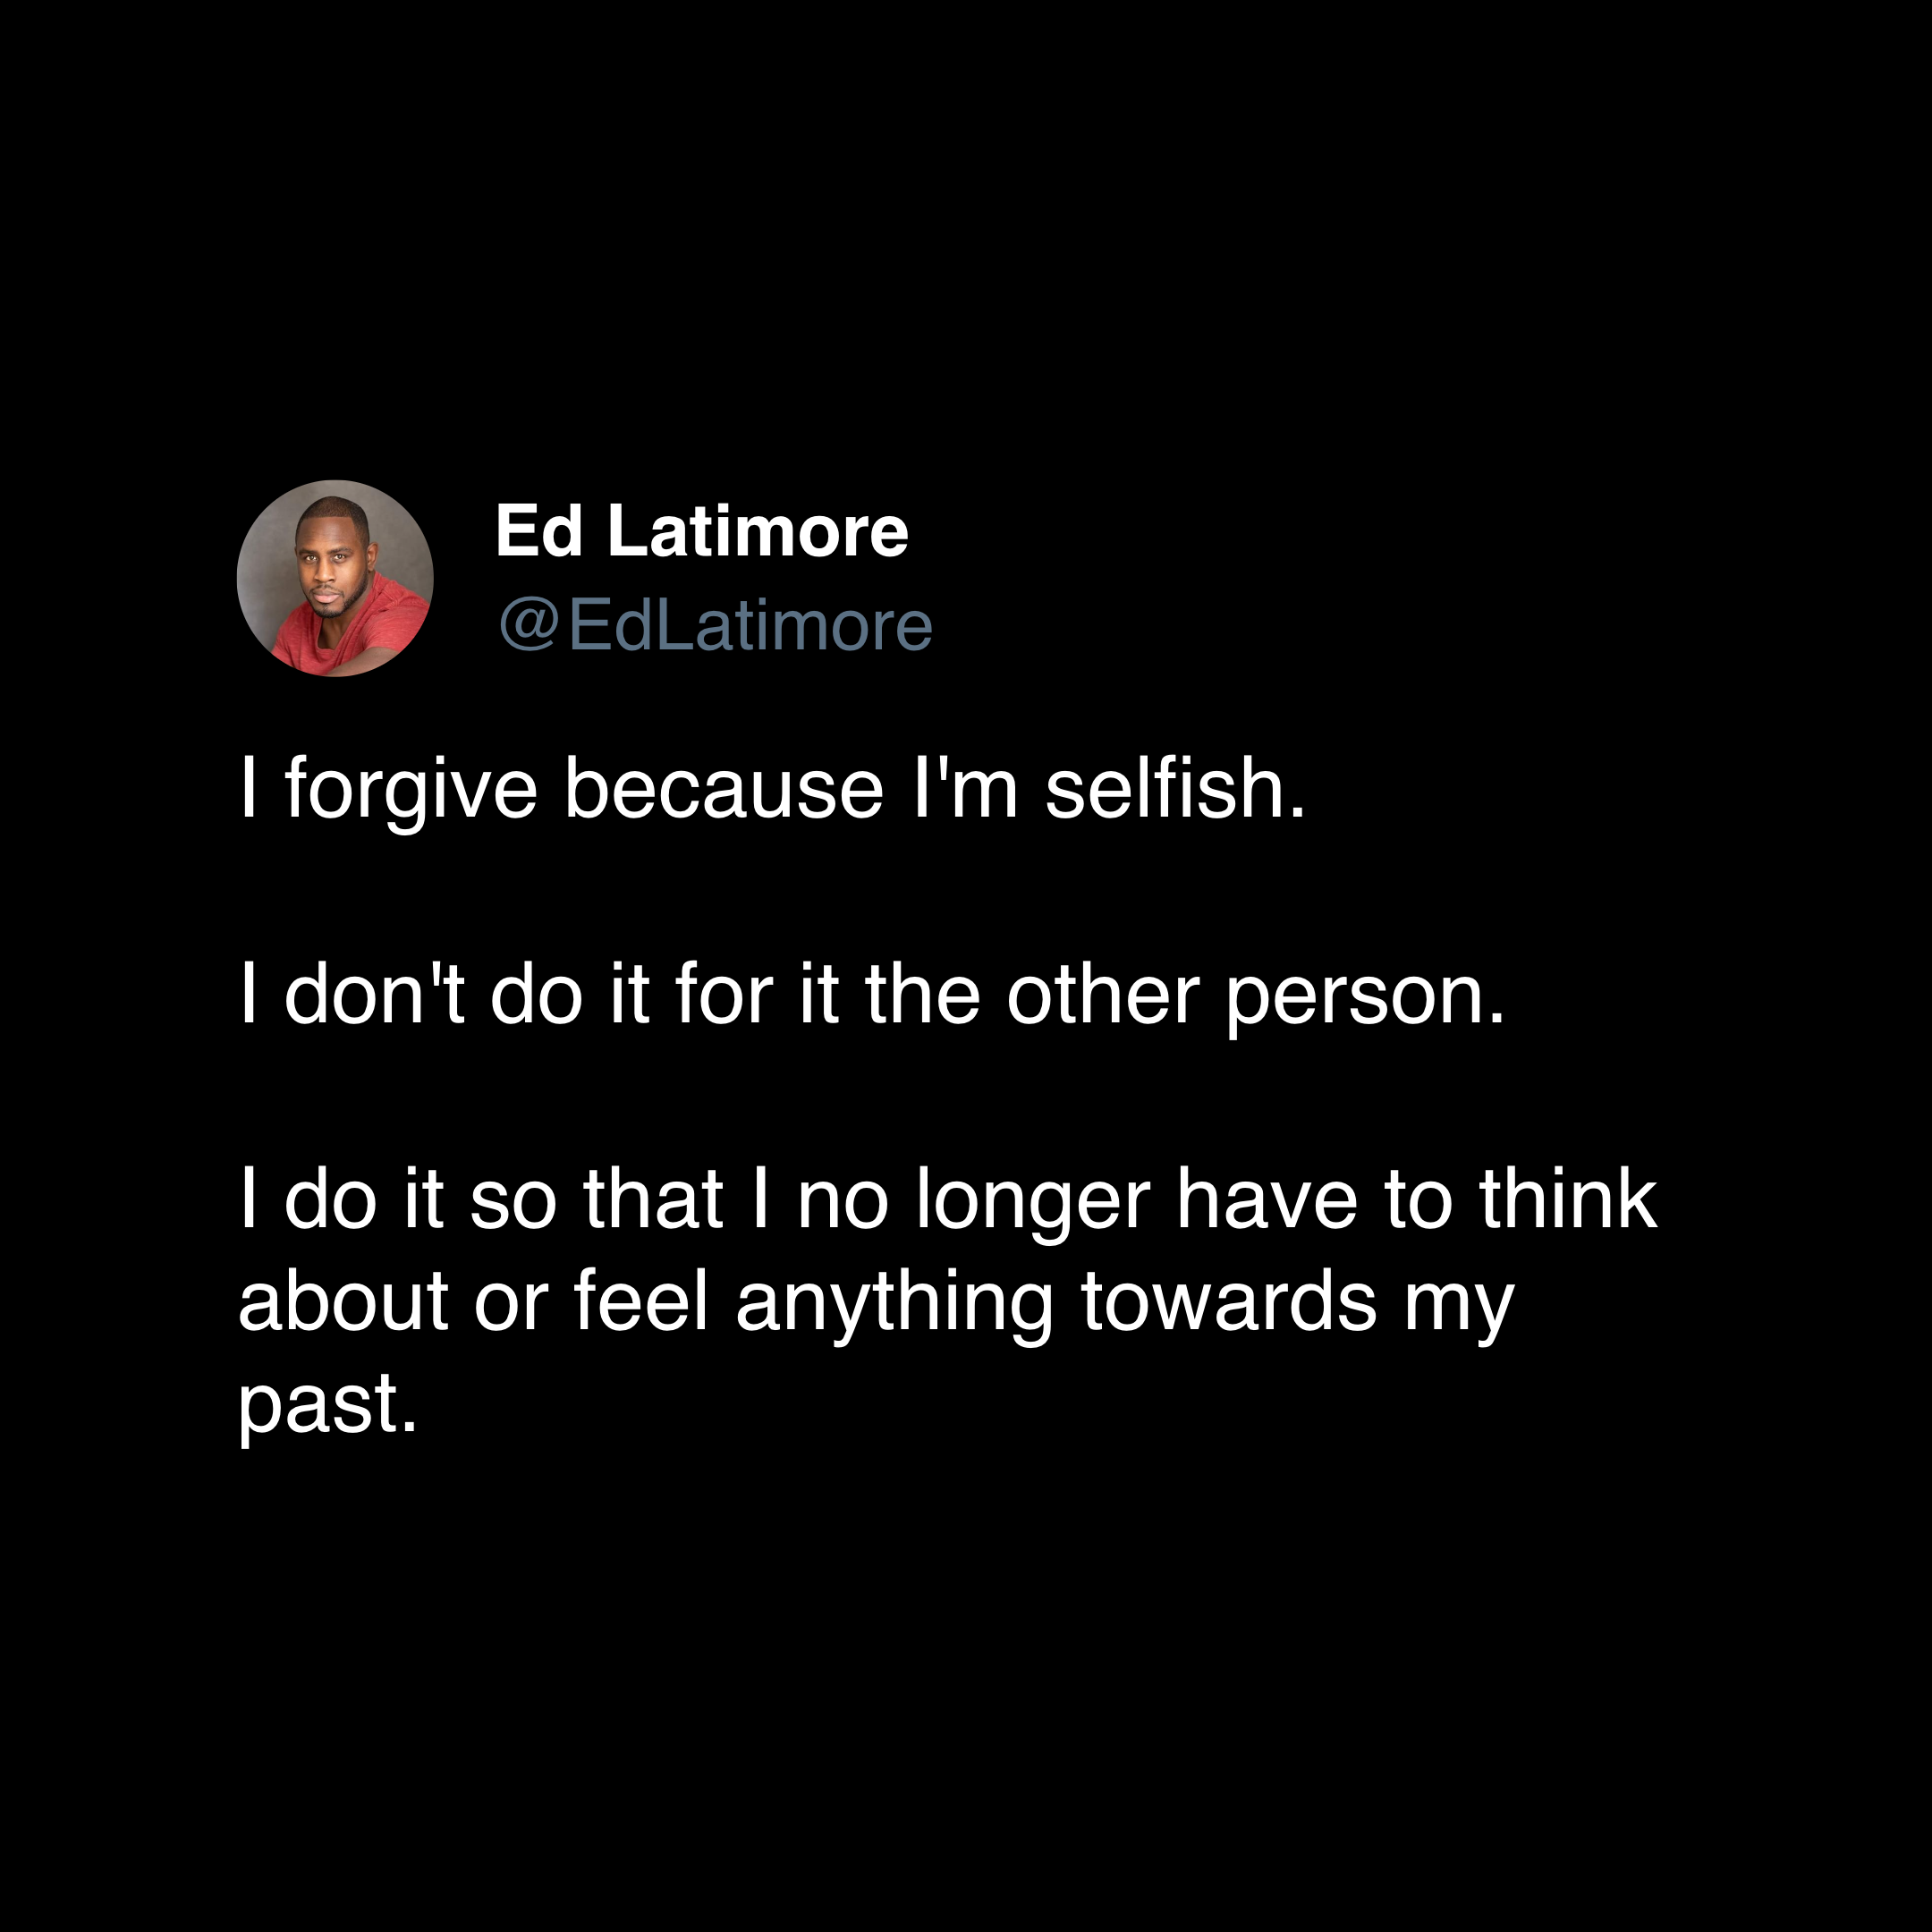 ed latimore forgiveness quotes "I forgive because I'm selfish"